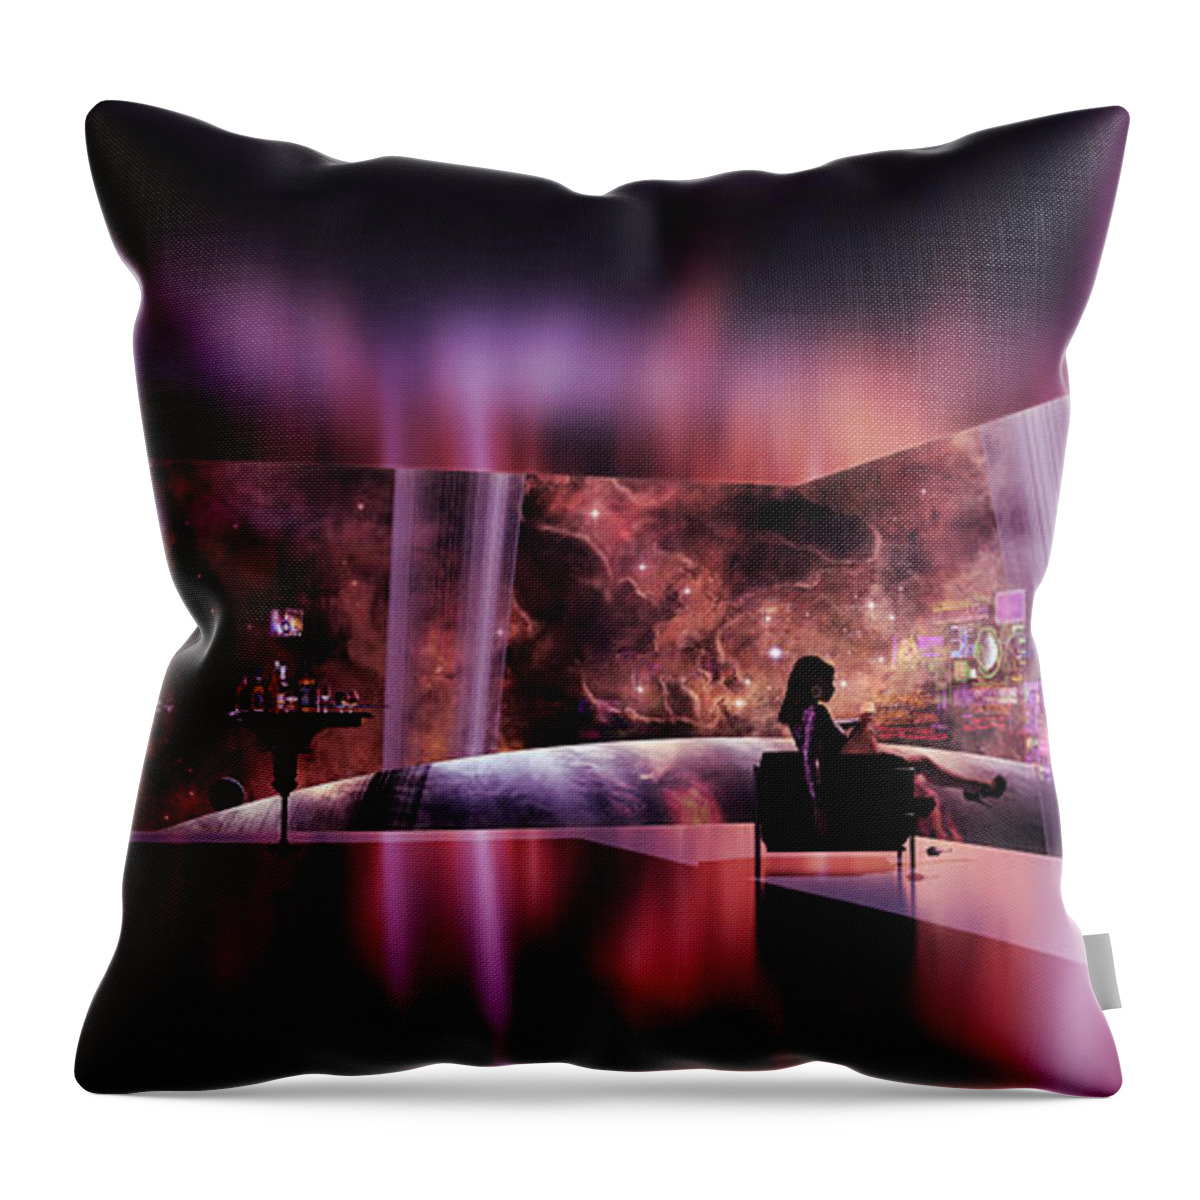 Horizontal Throw Pillow featuring the digital art A Rich Woman Looking At A Terrestrial by Brian Christensen